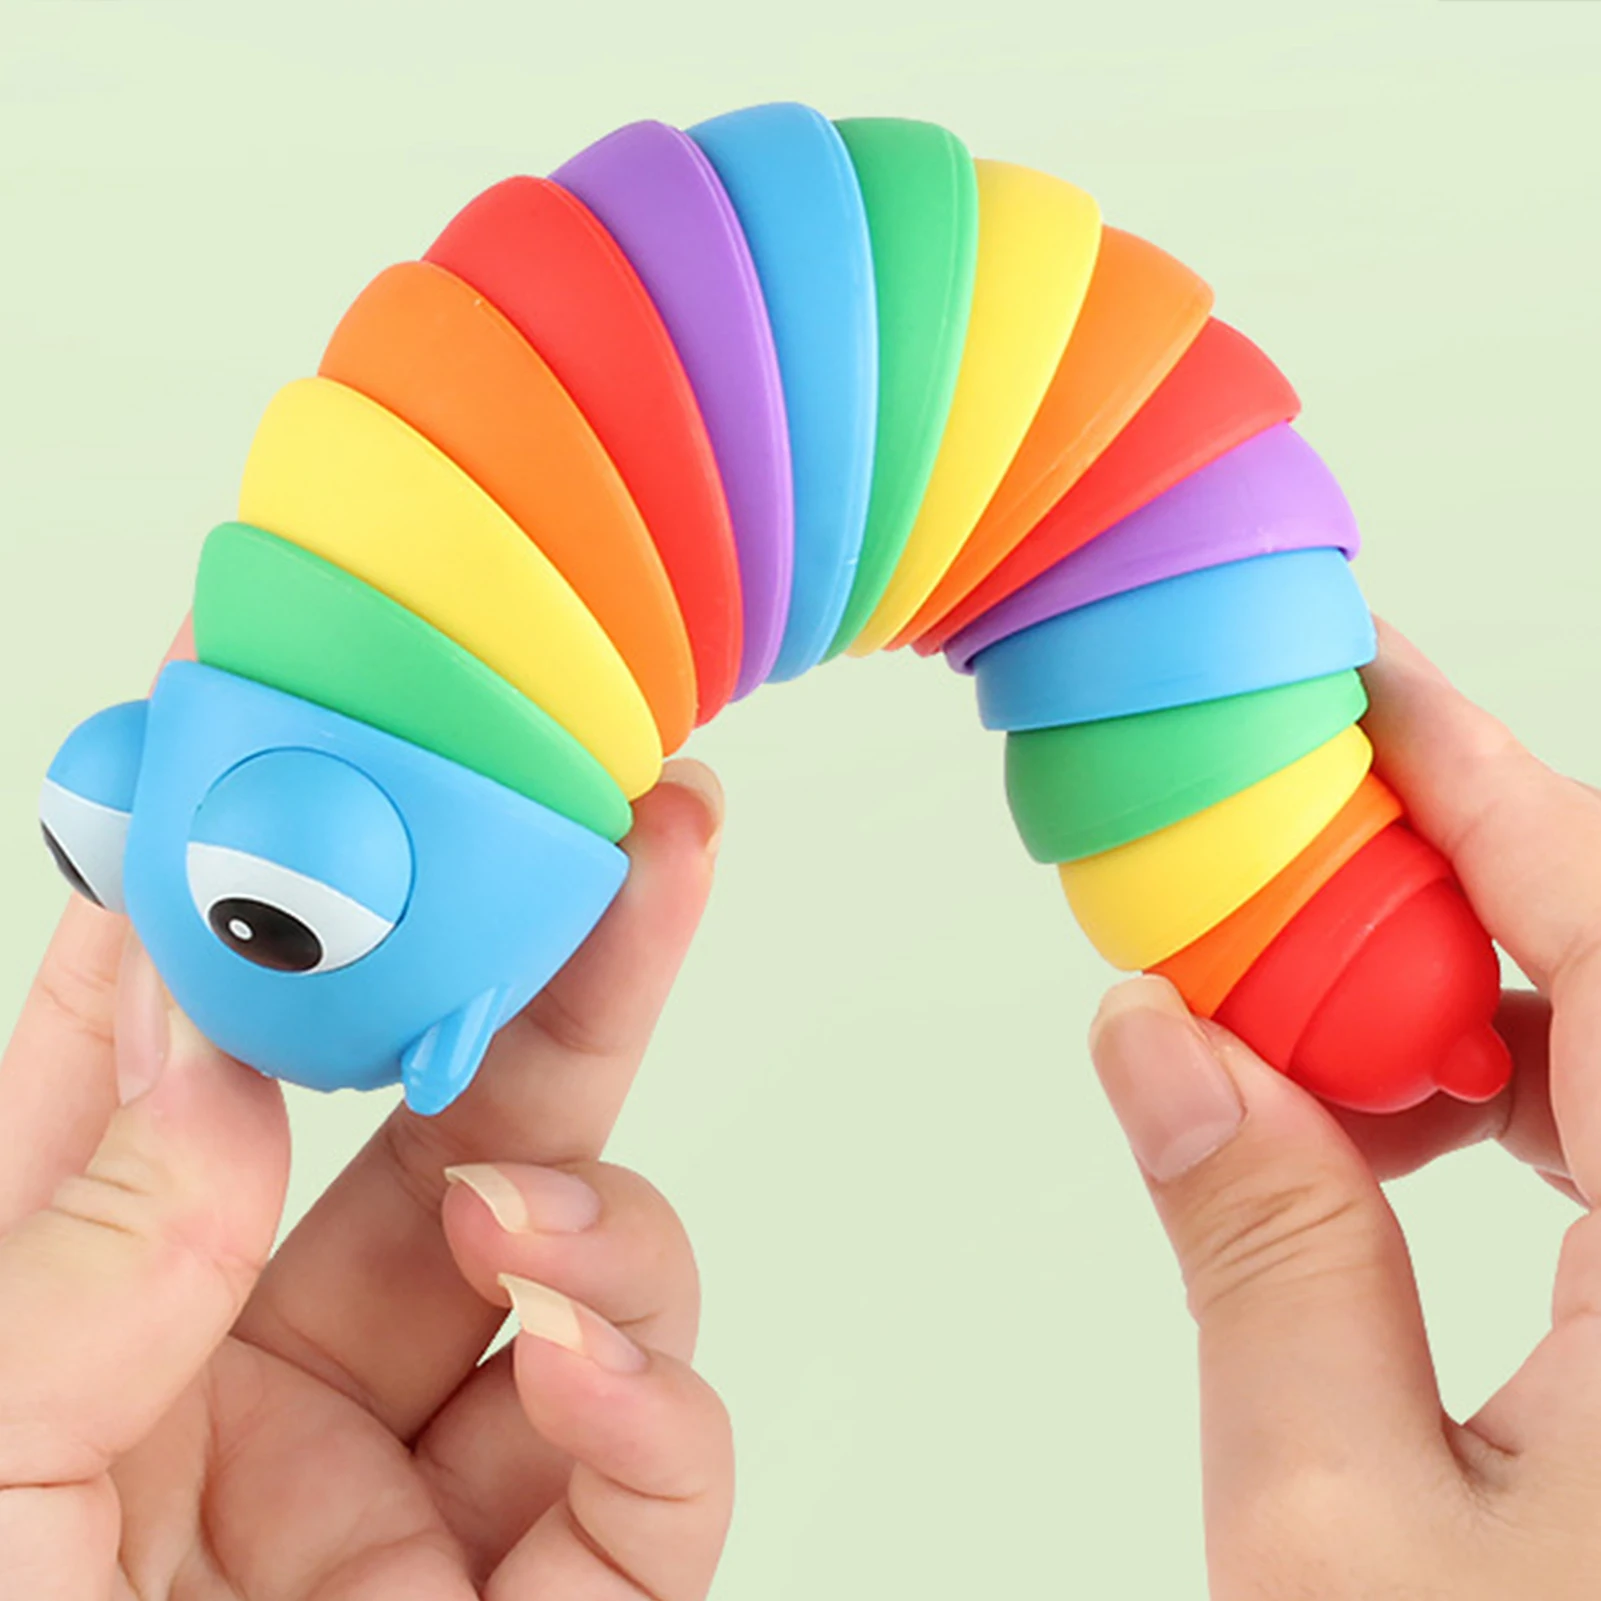 

Articulated Flexible Slug Fingertip Toys 3D Slug Fidgets Toys for Children Aldult Stress Relief Anti-Anxiety Sensory Toys Gifts